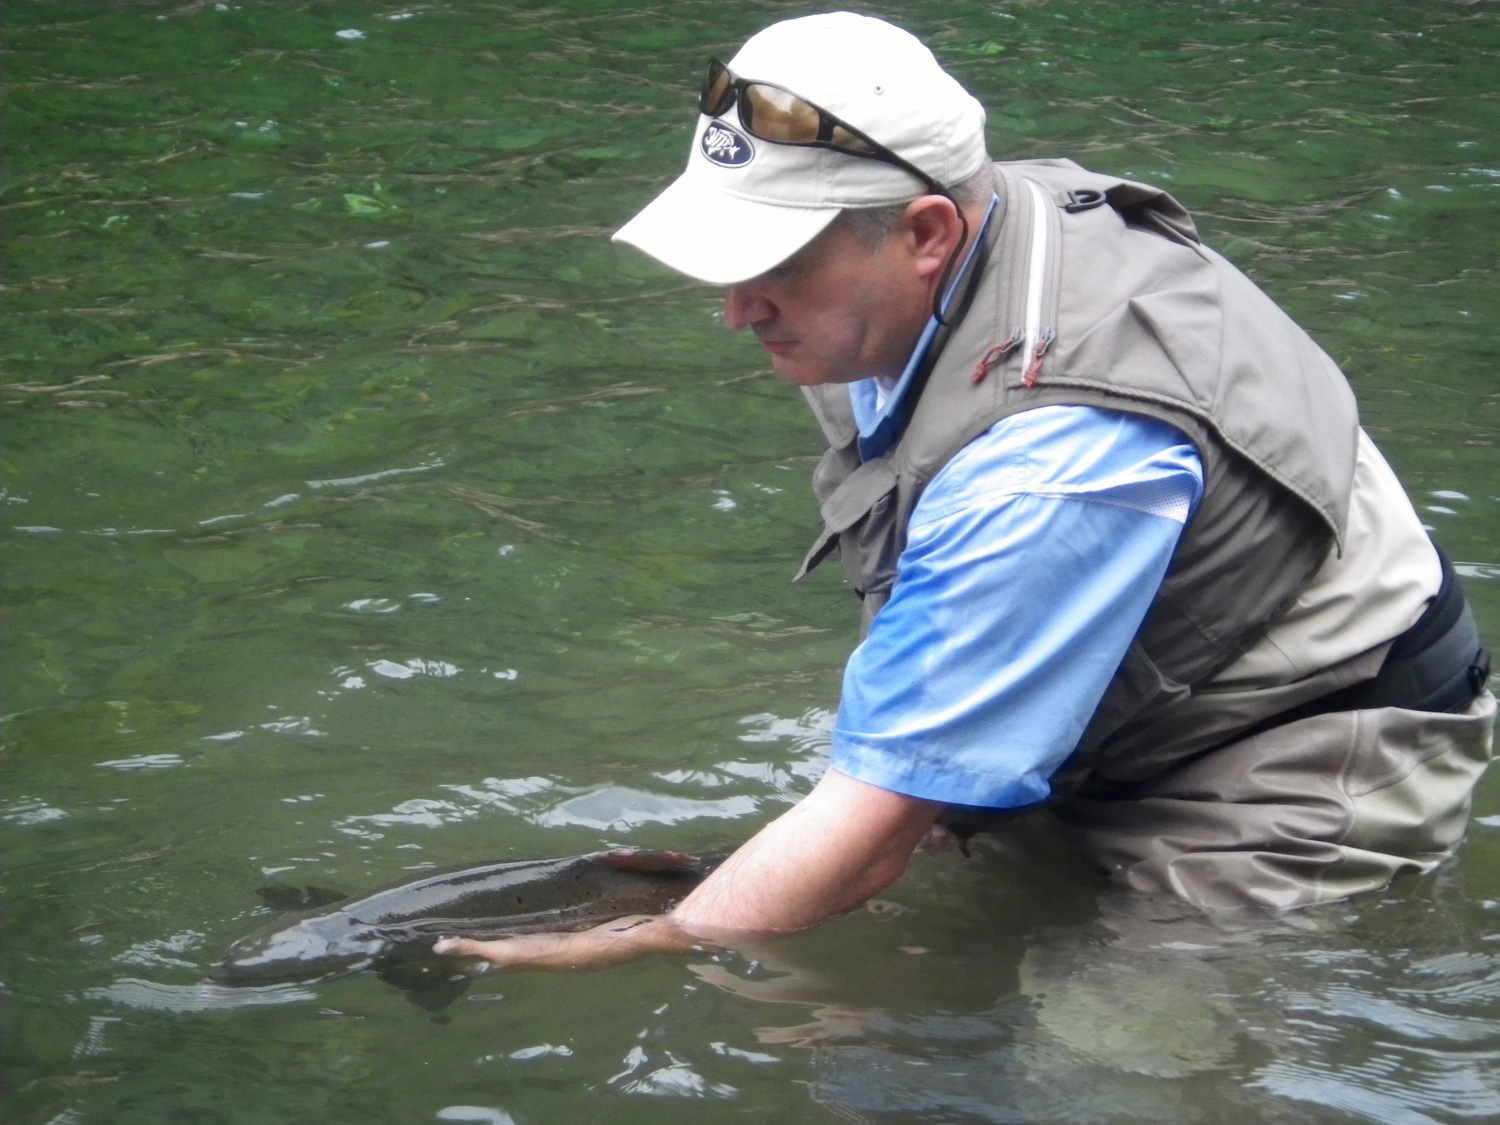 angler slips a Atlantic Salmon back in the water